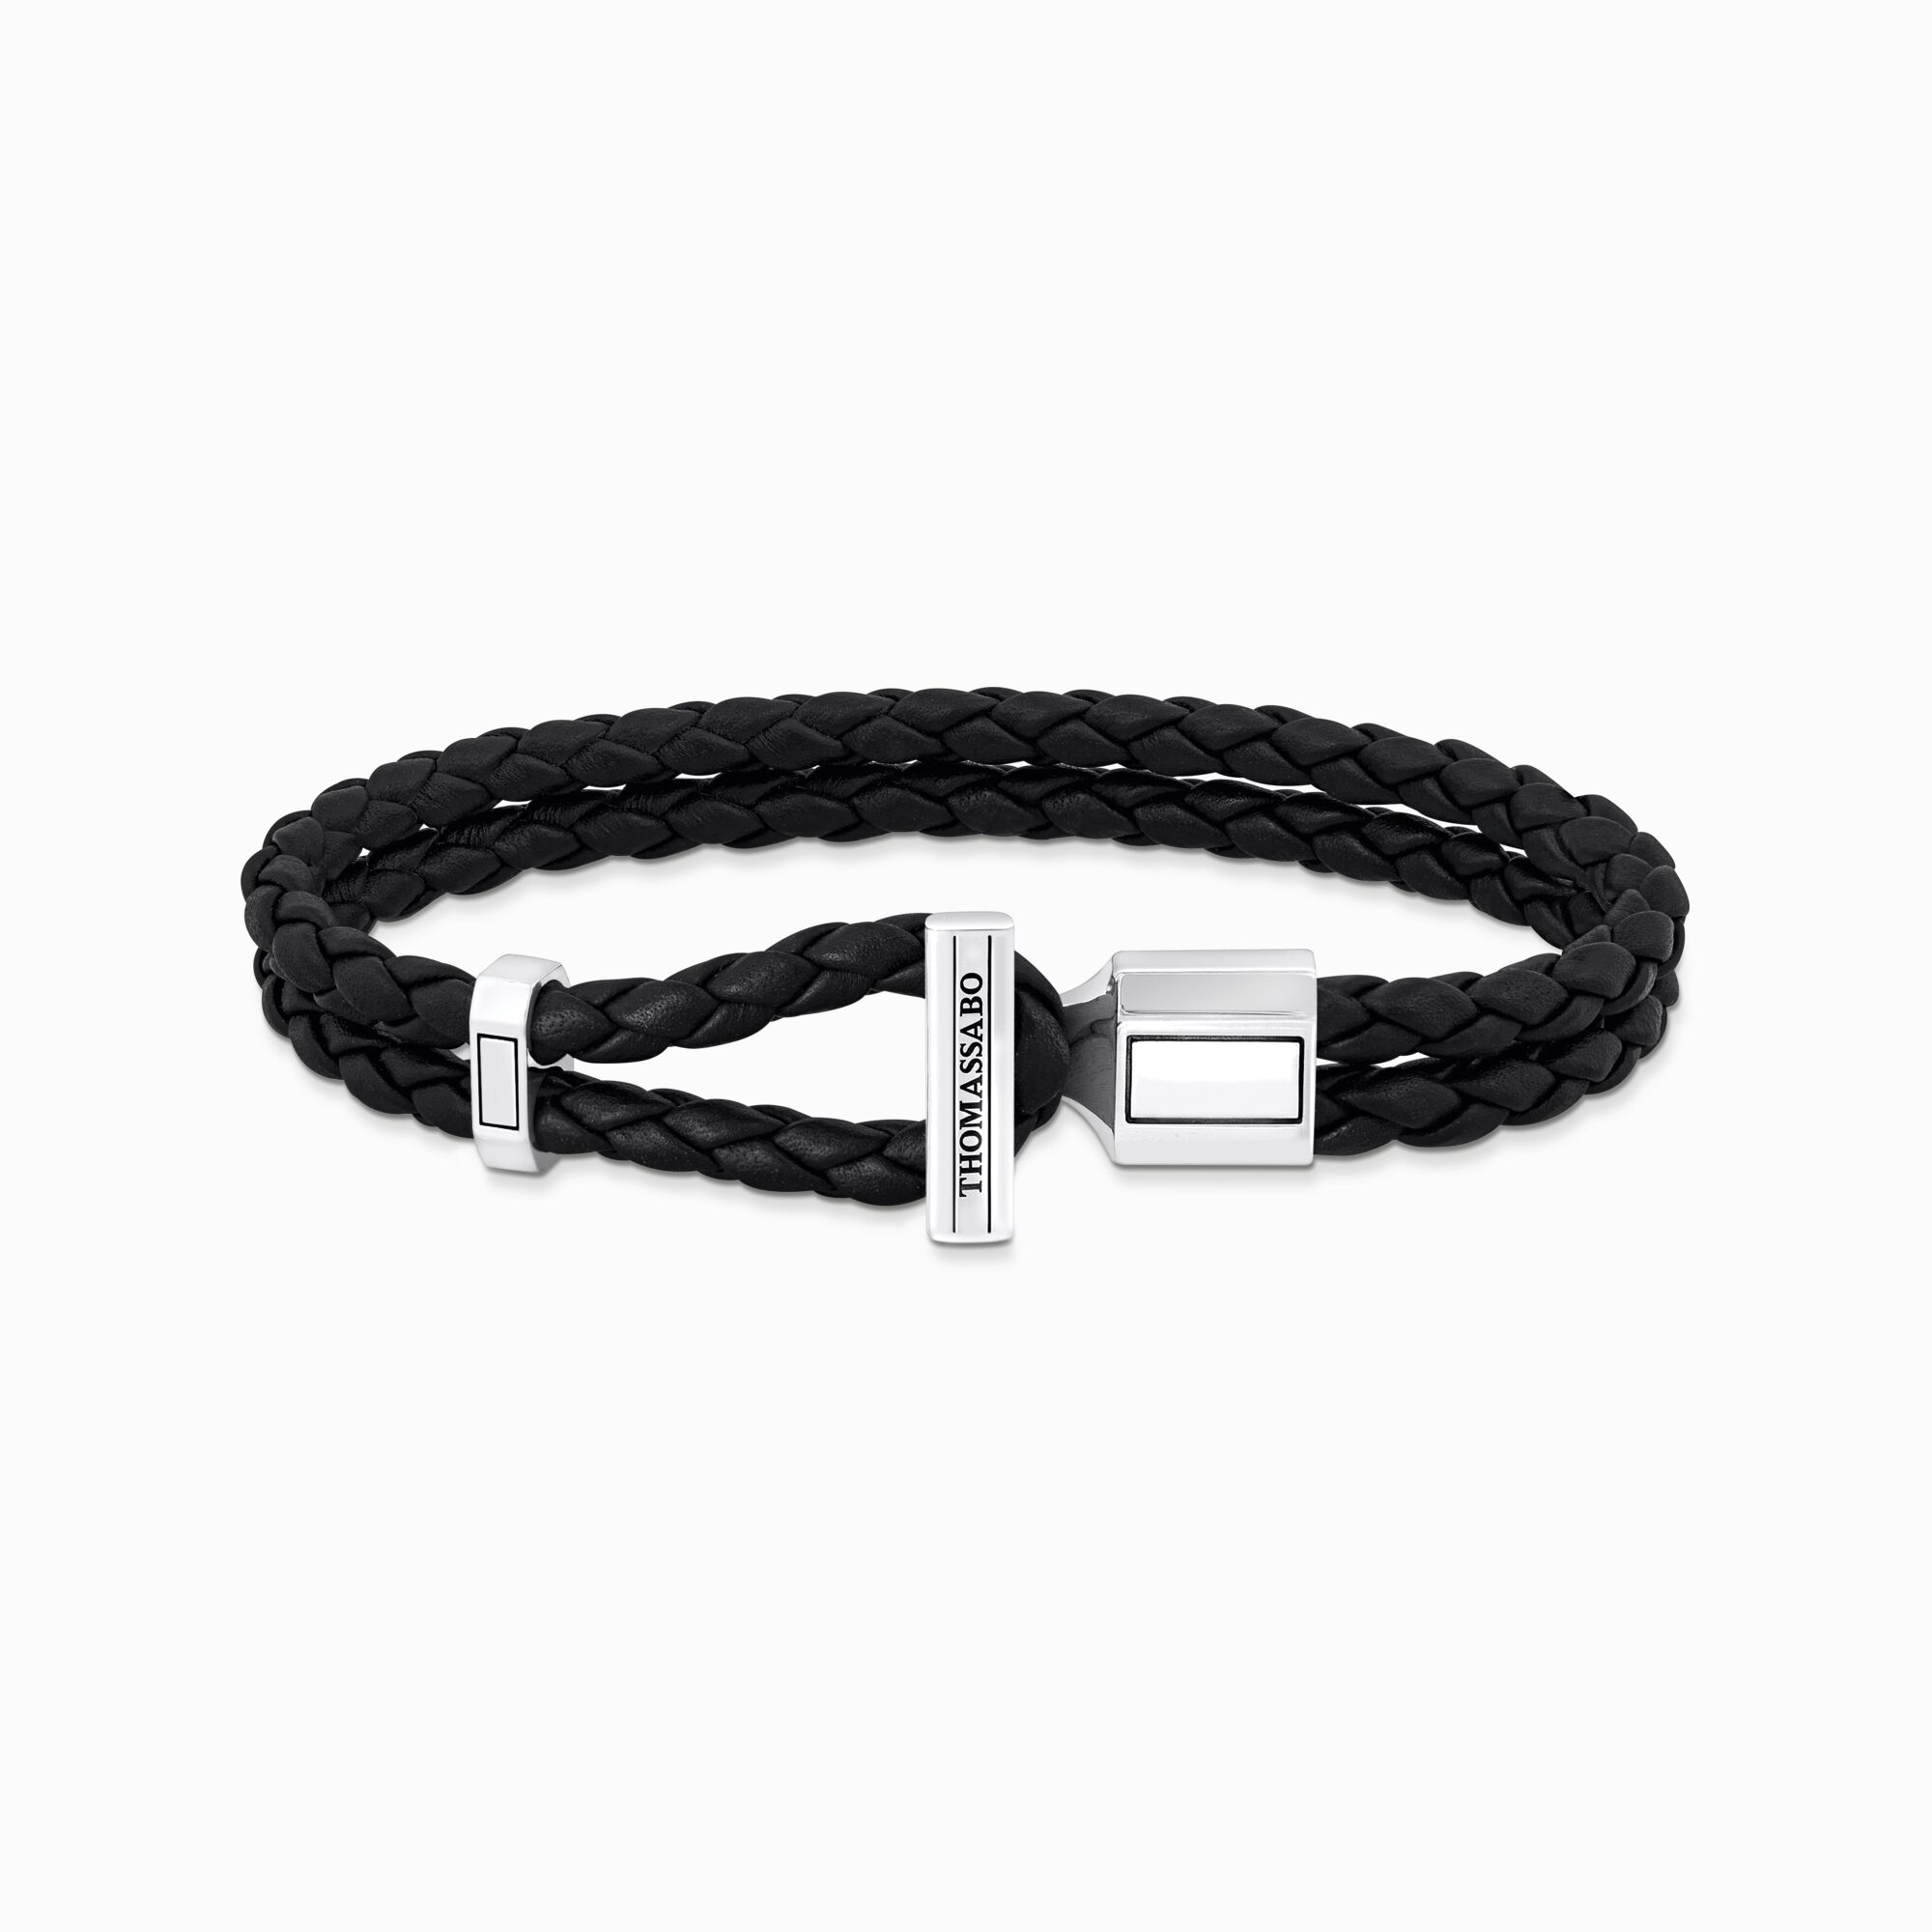 THOMAS SABO Double Bracelet with Braided, Black Leather, L21 / 21 cm